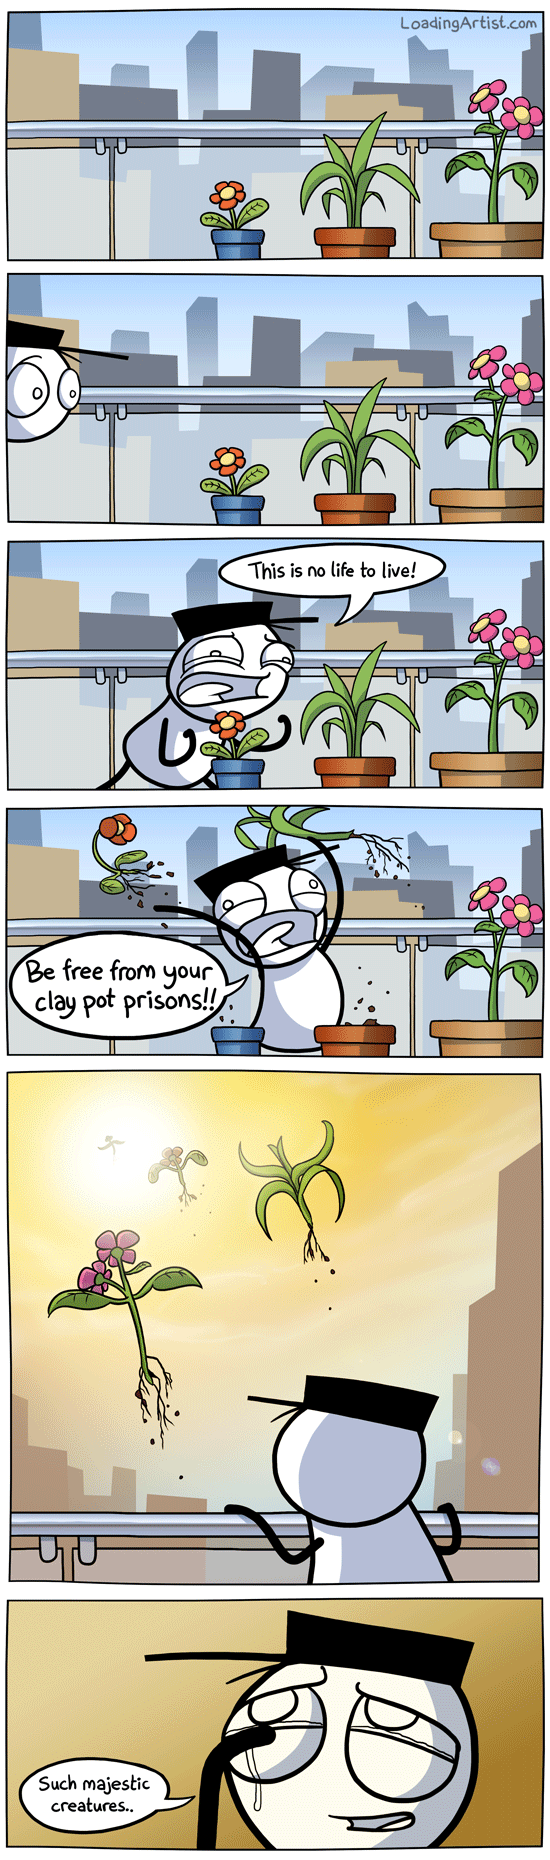 Plants deserve better...